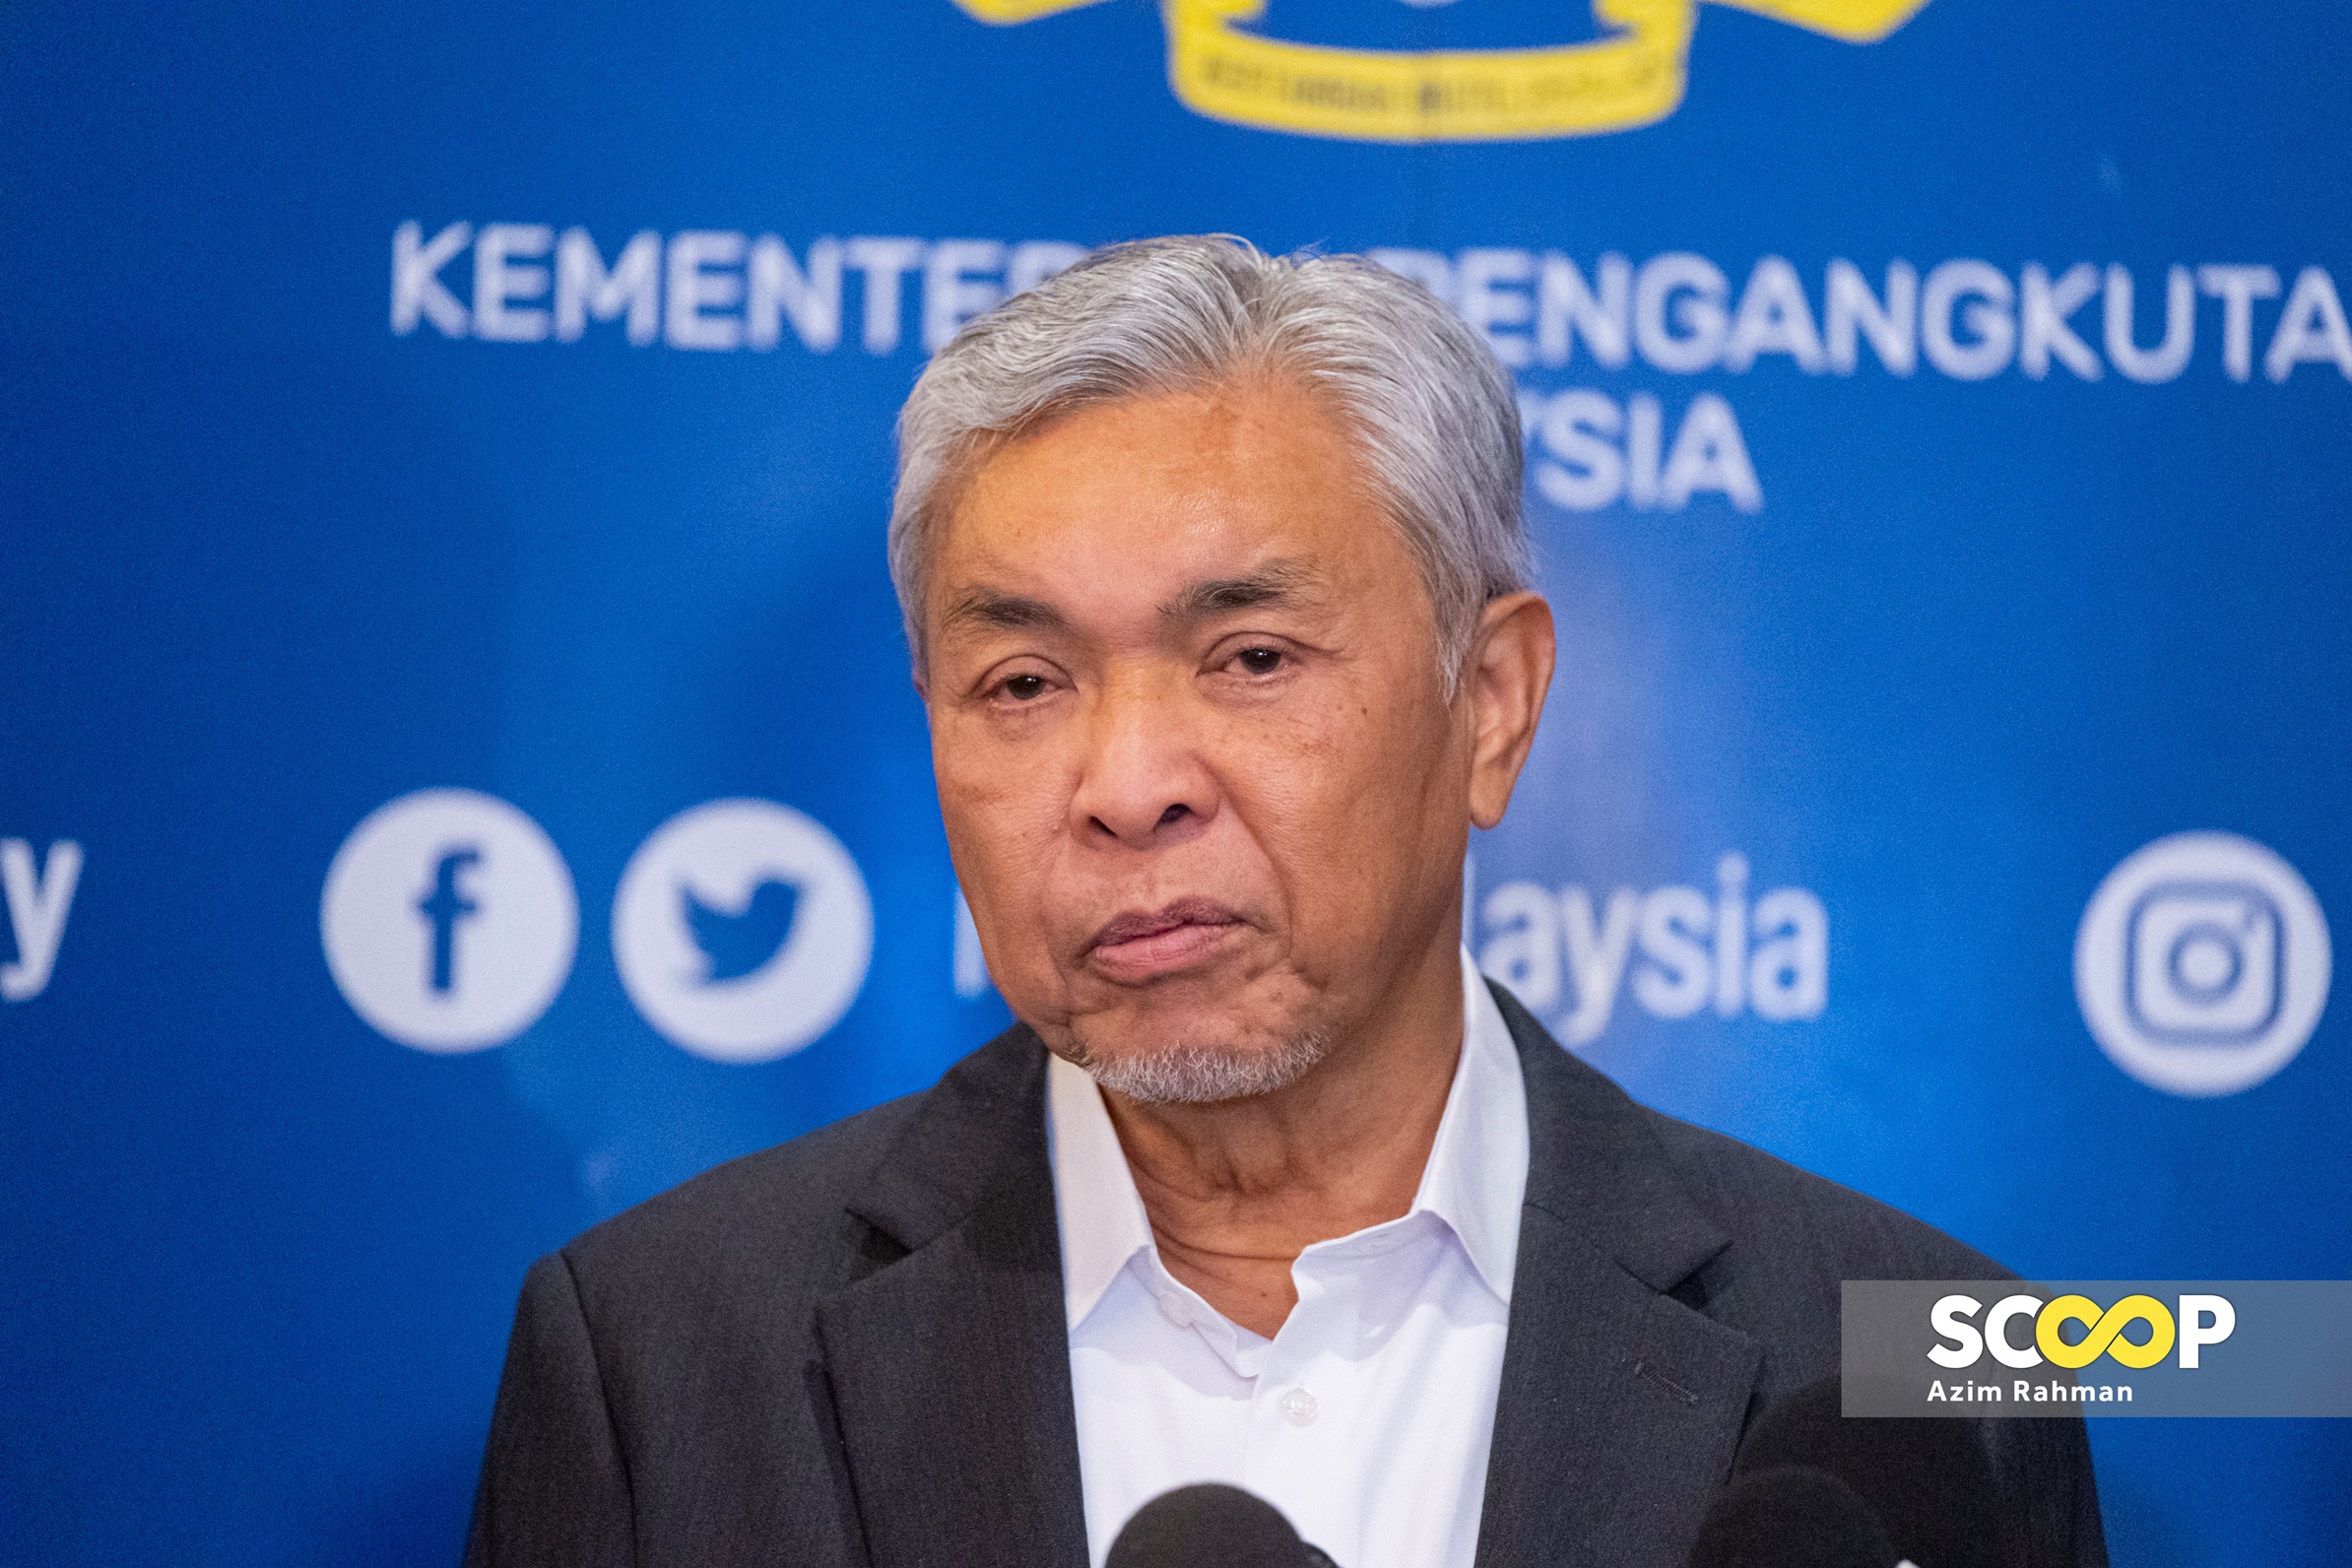 Despite no local council post, Umno will continue to back Selangor unity govt: Zahid